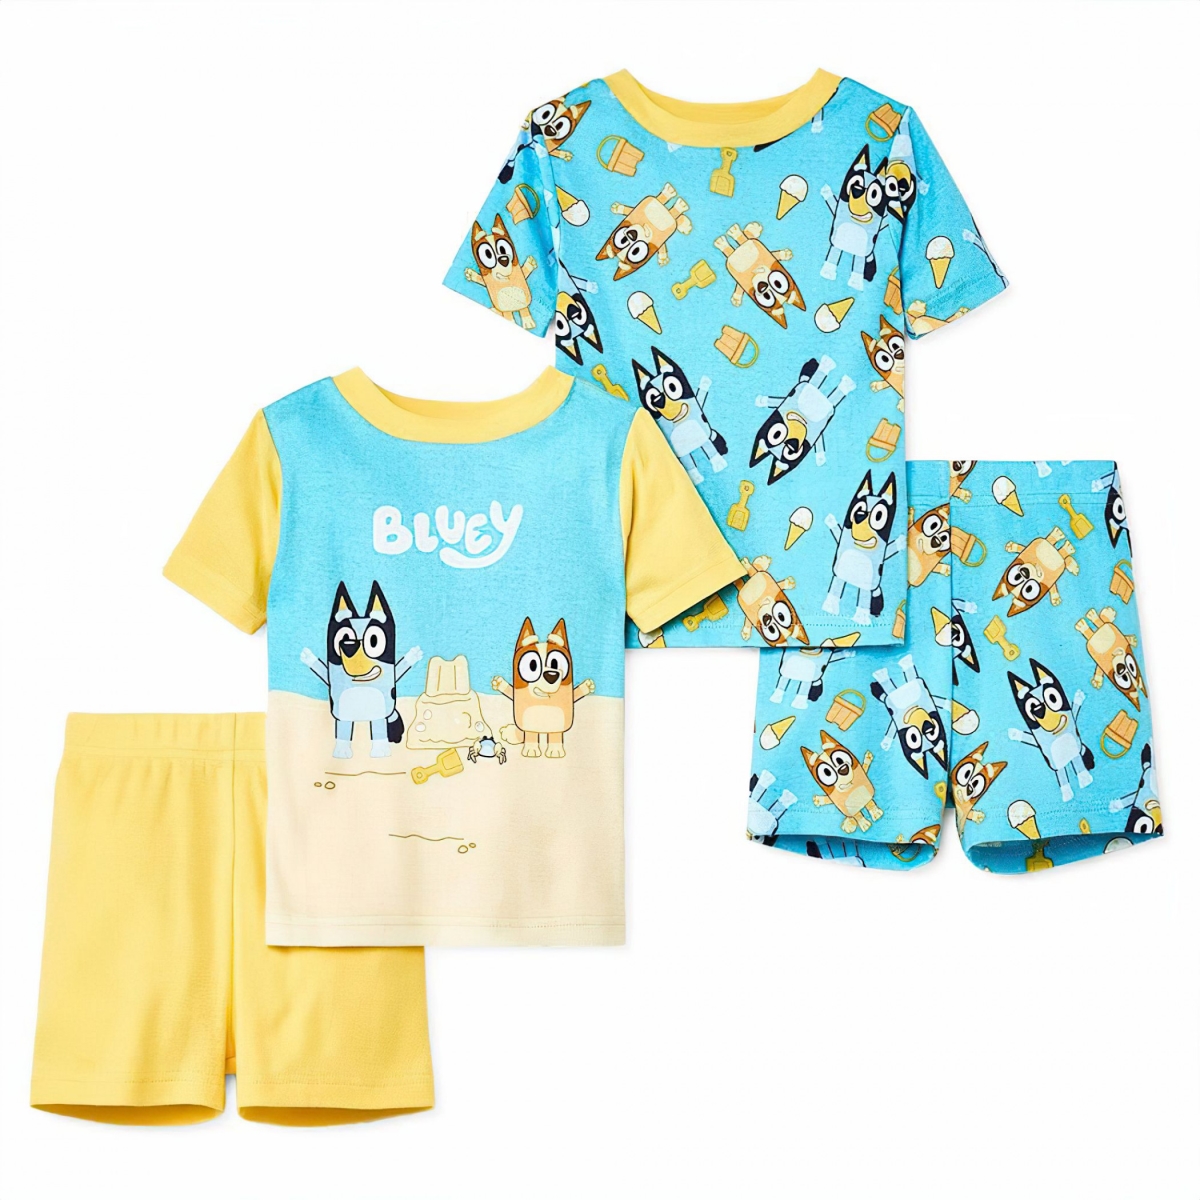 Picture of Bluey 873075-toddler4t Bluey Sand Castles Toddler Pajama Set - Toddler 4T - 4 Piece